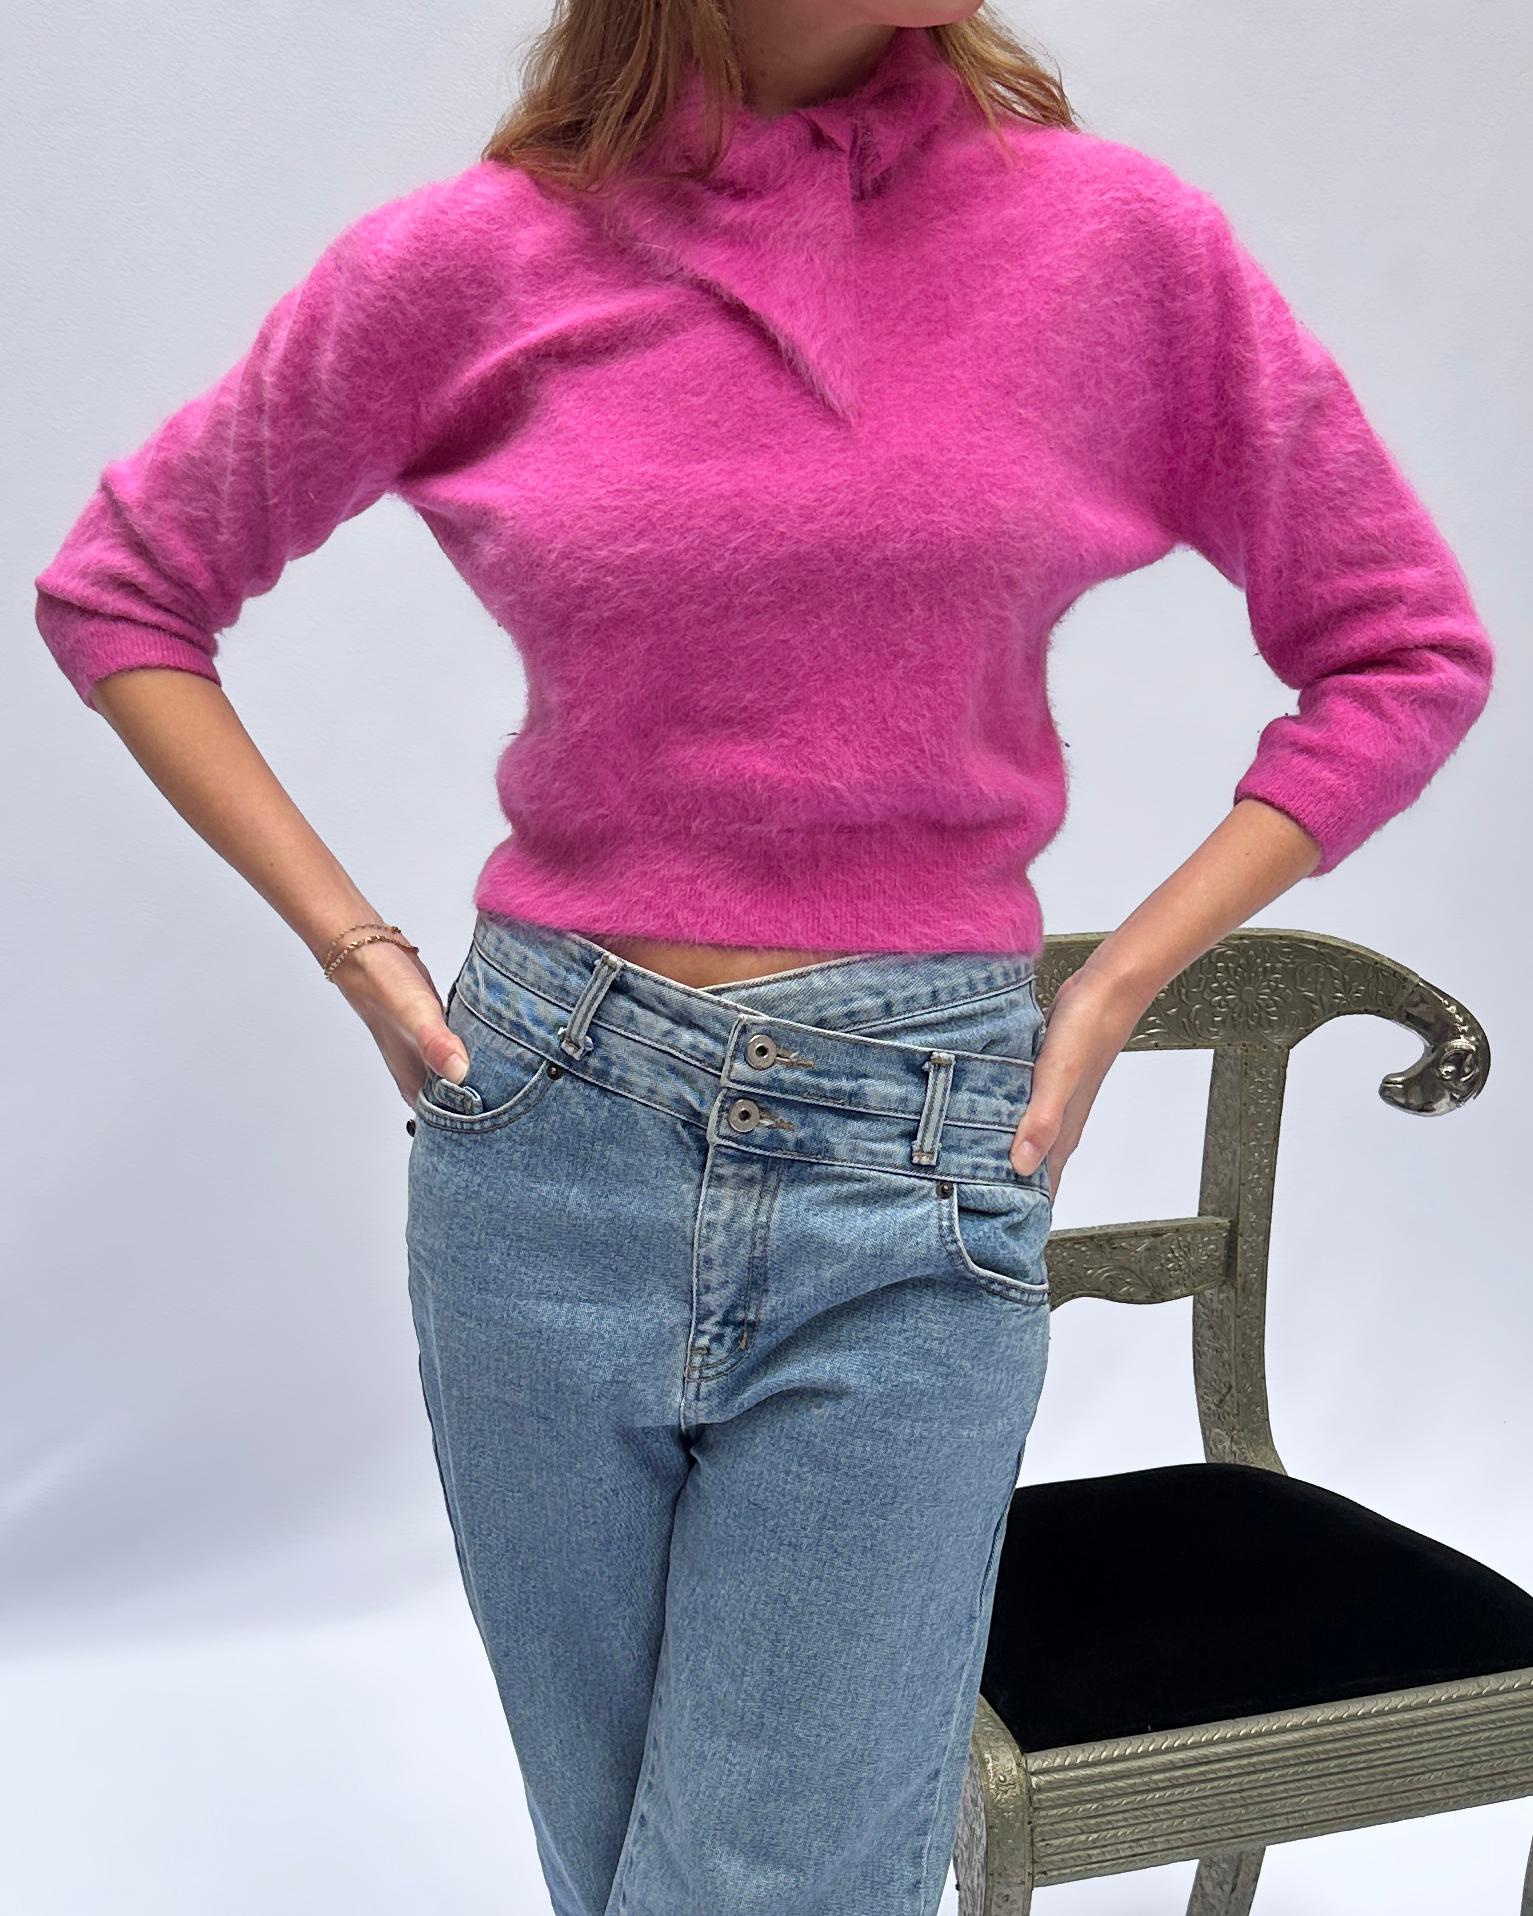 Vintage 1950s Pink Angora Sweater 2